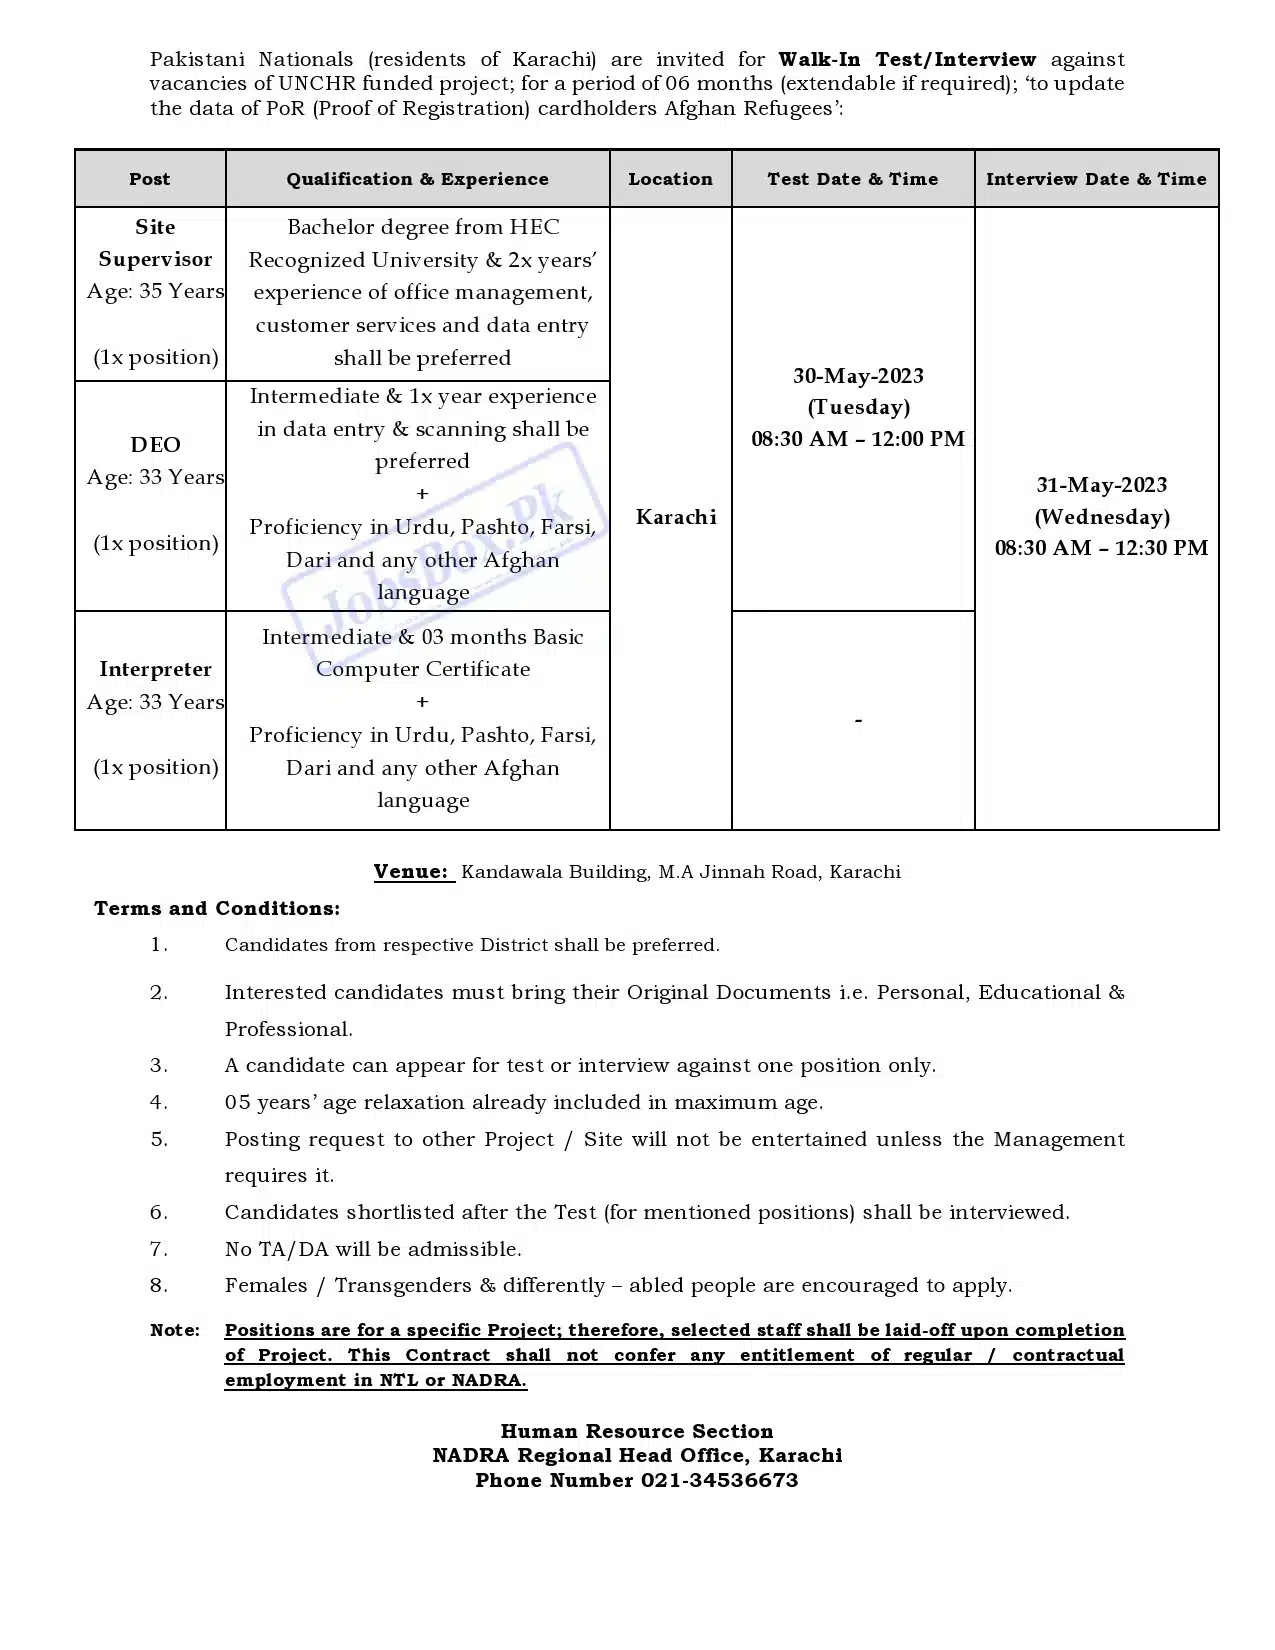 NADRA Regional Head Office Karachi Jobs 2023 Recruitment